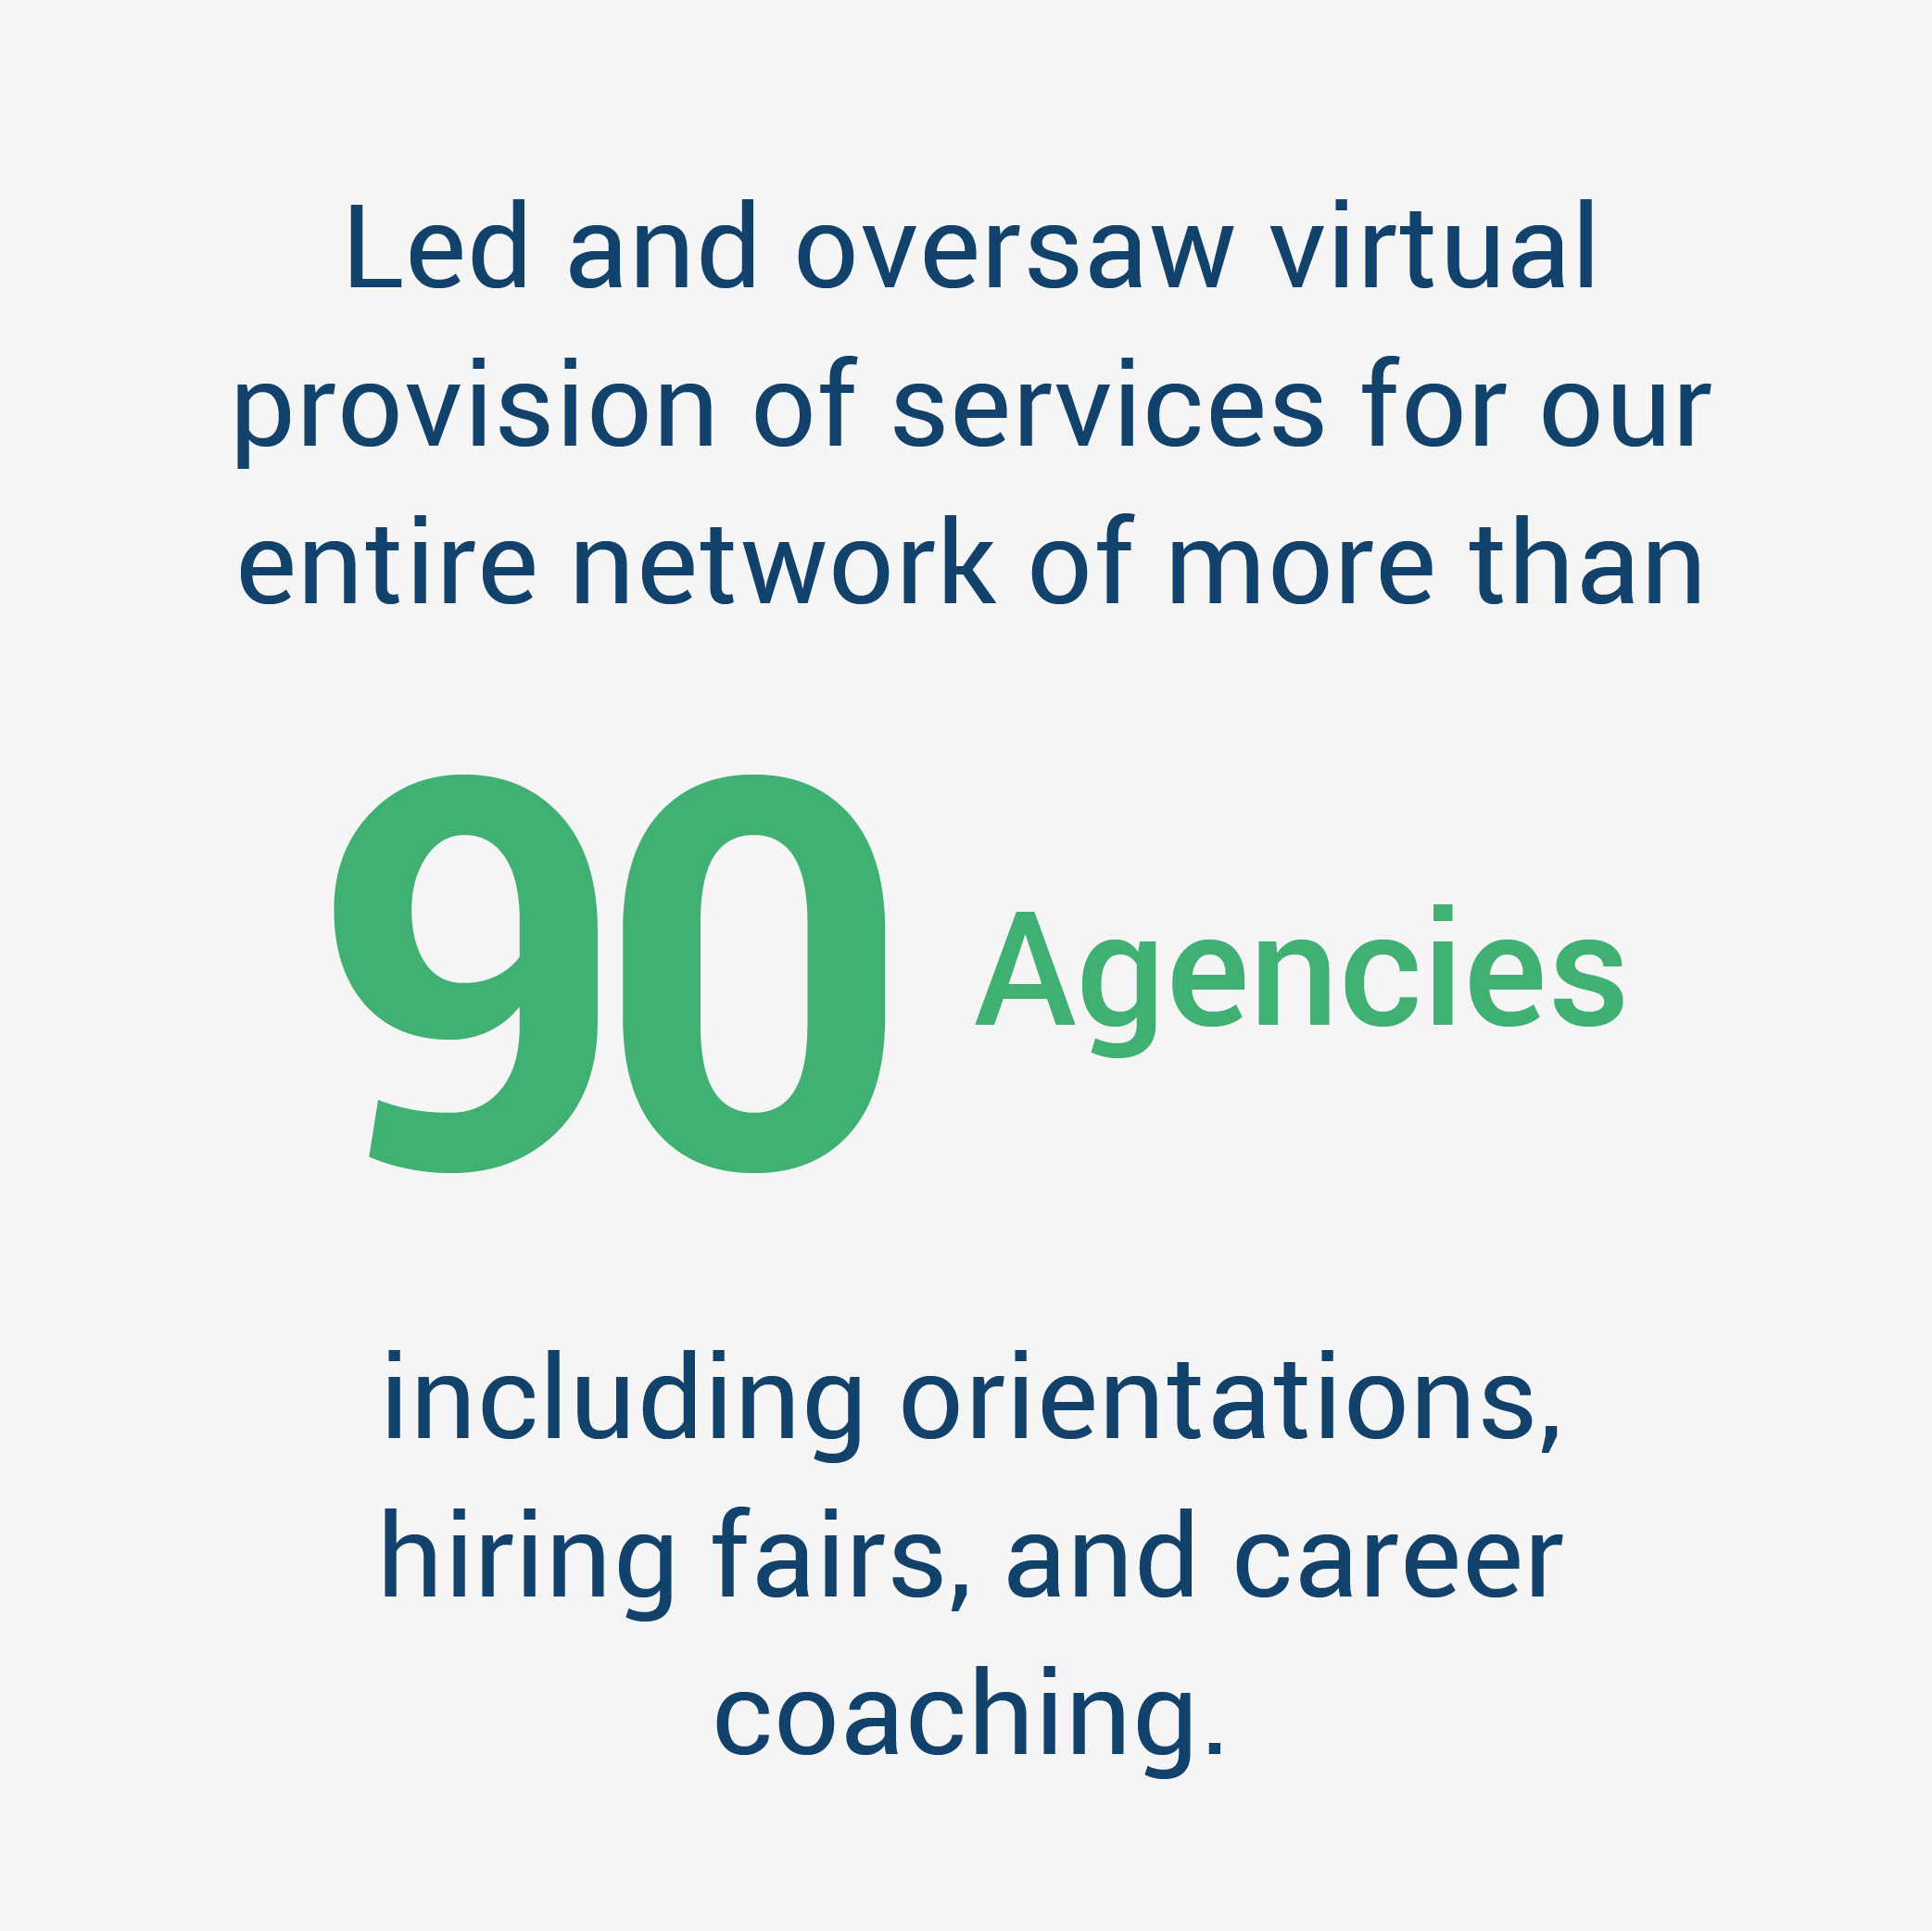 network of over 90 agencies